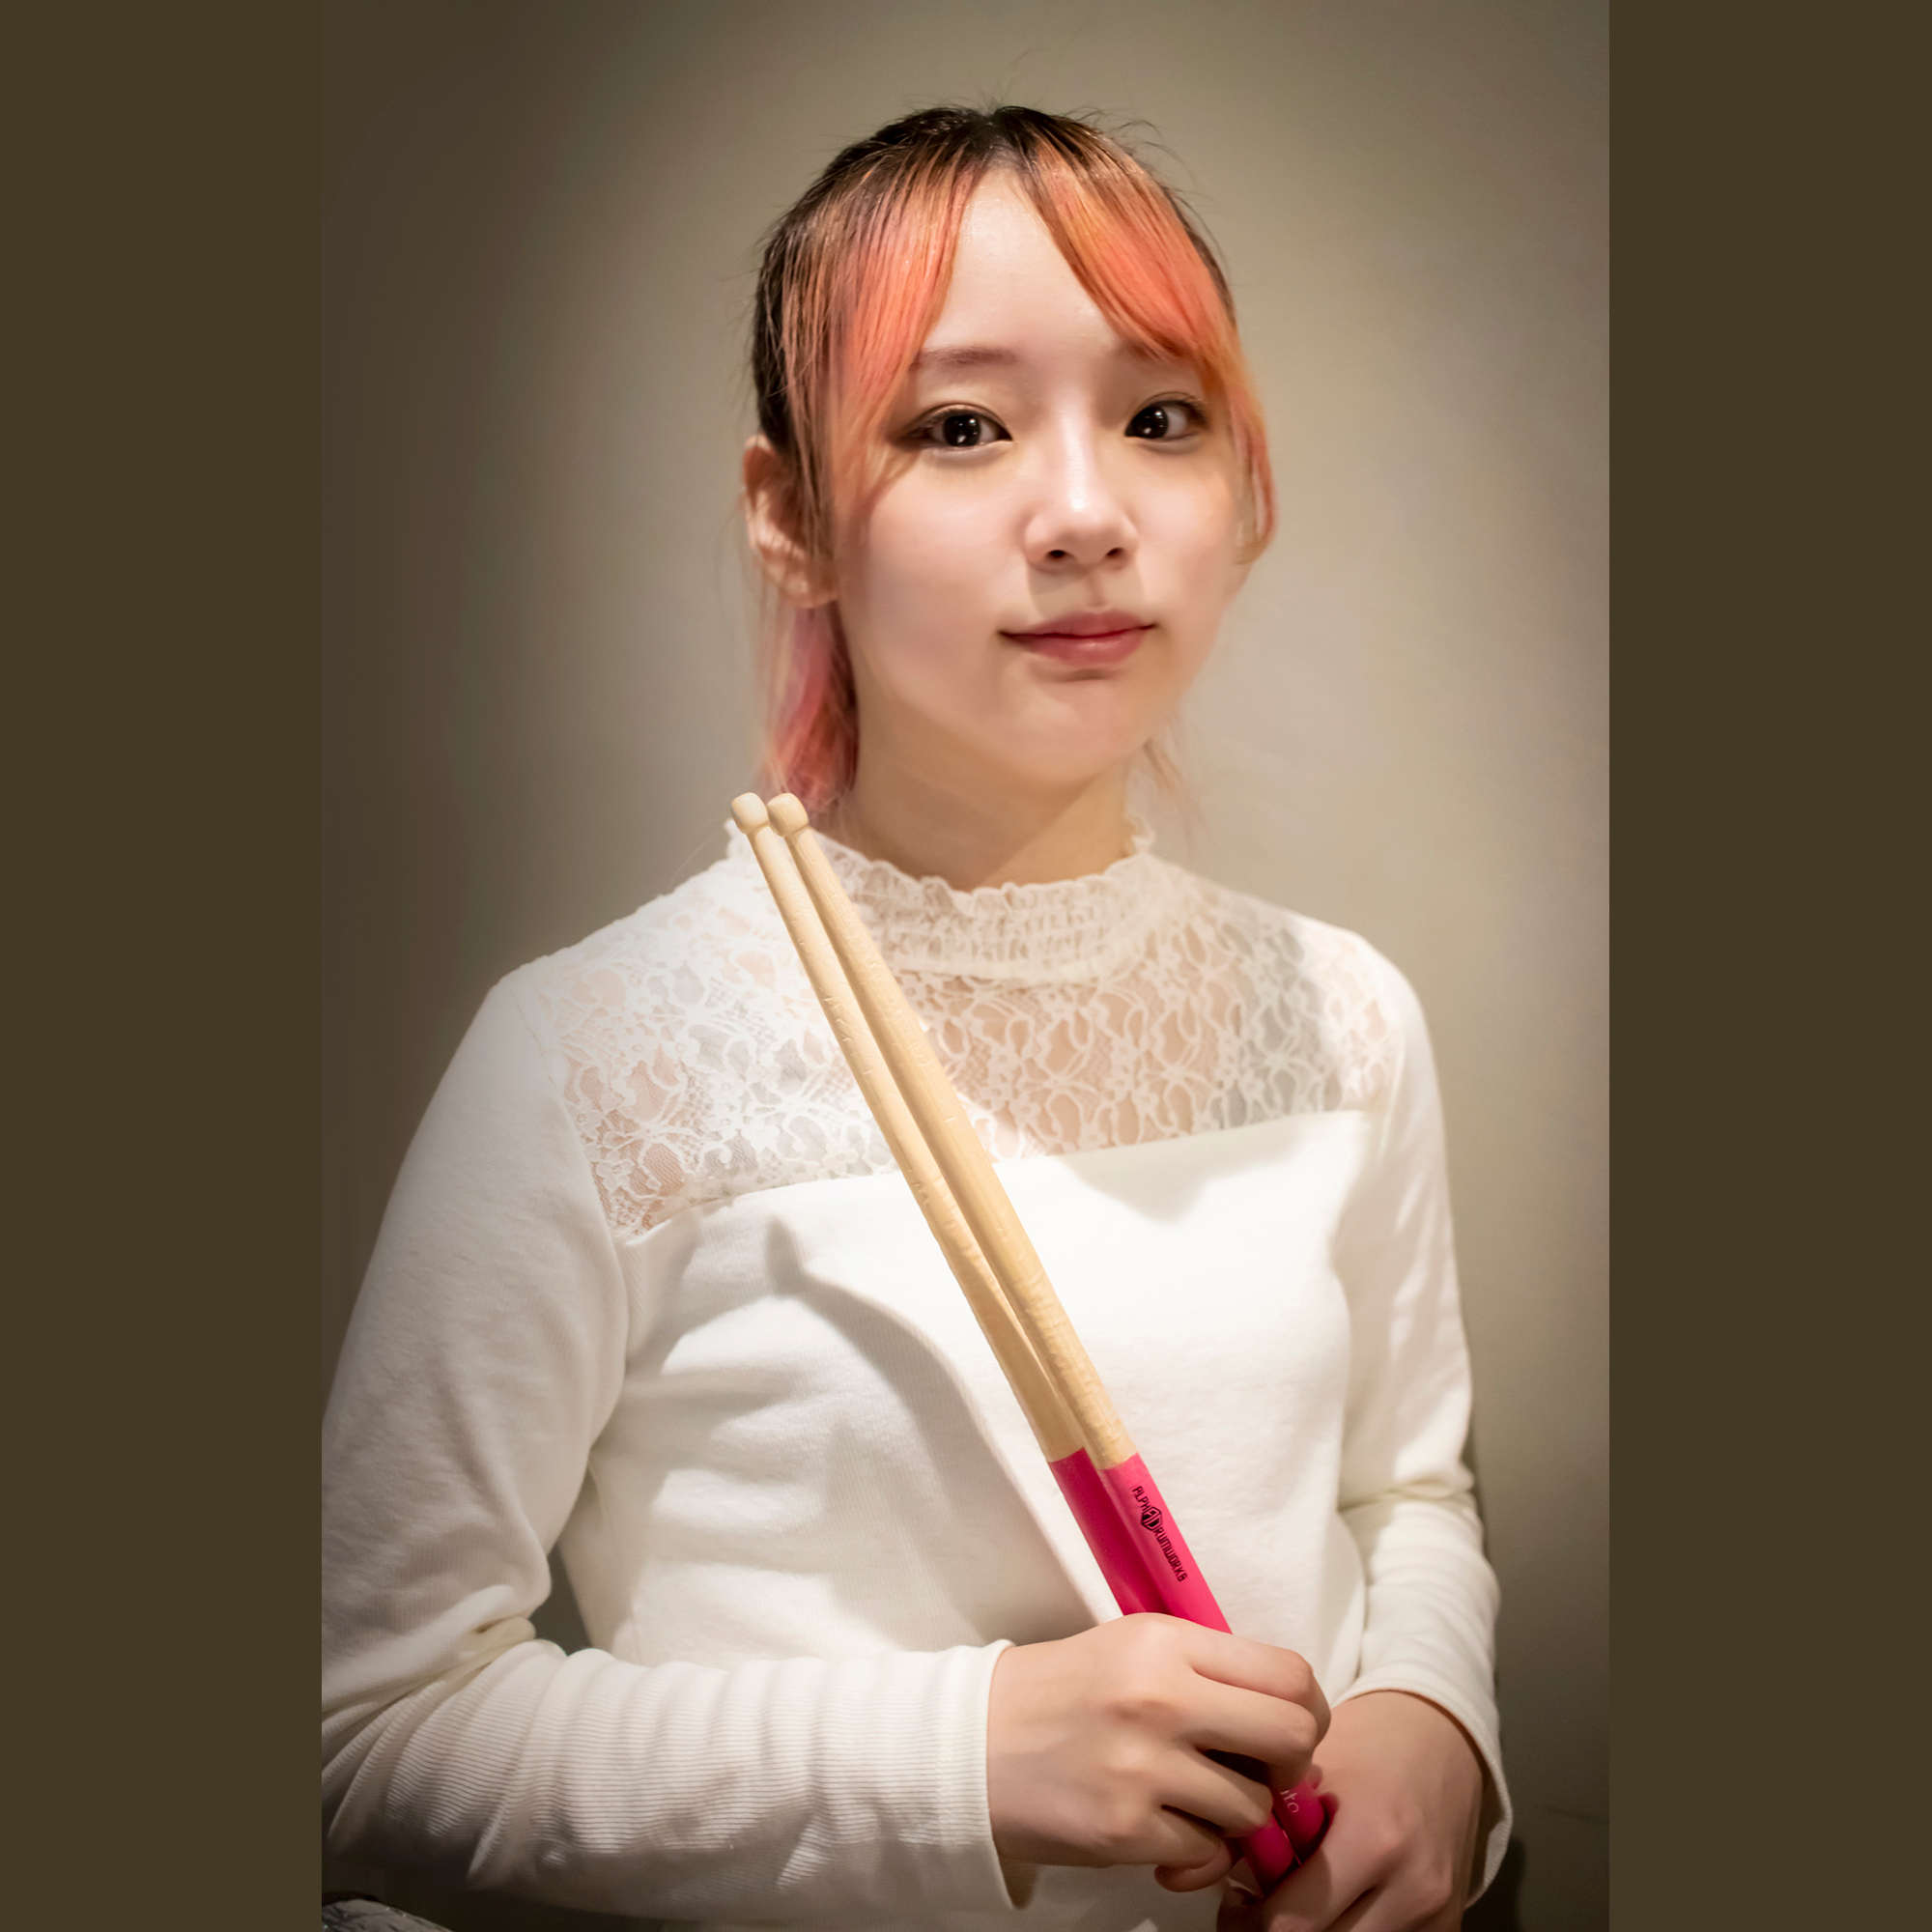 [Digi-Gra] Miyu Kanade 奏自由/かなで自由 Photoset 04 写真集(29) -美女写真美女图片大全-高清美女图库